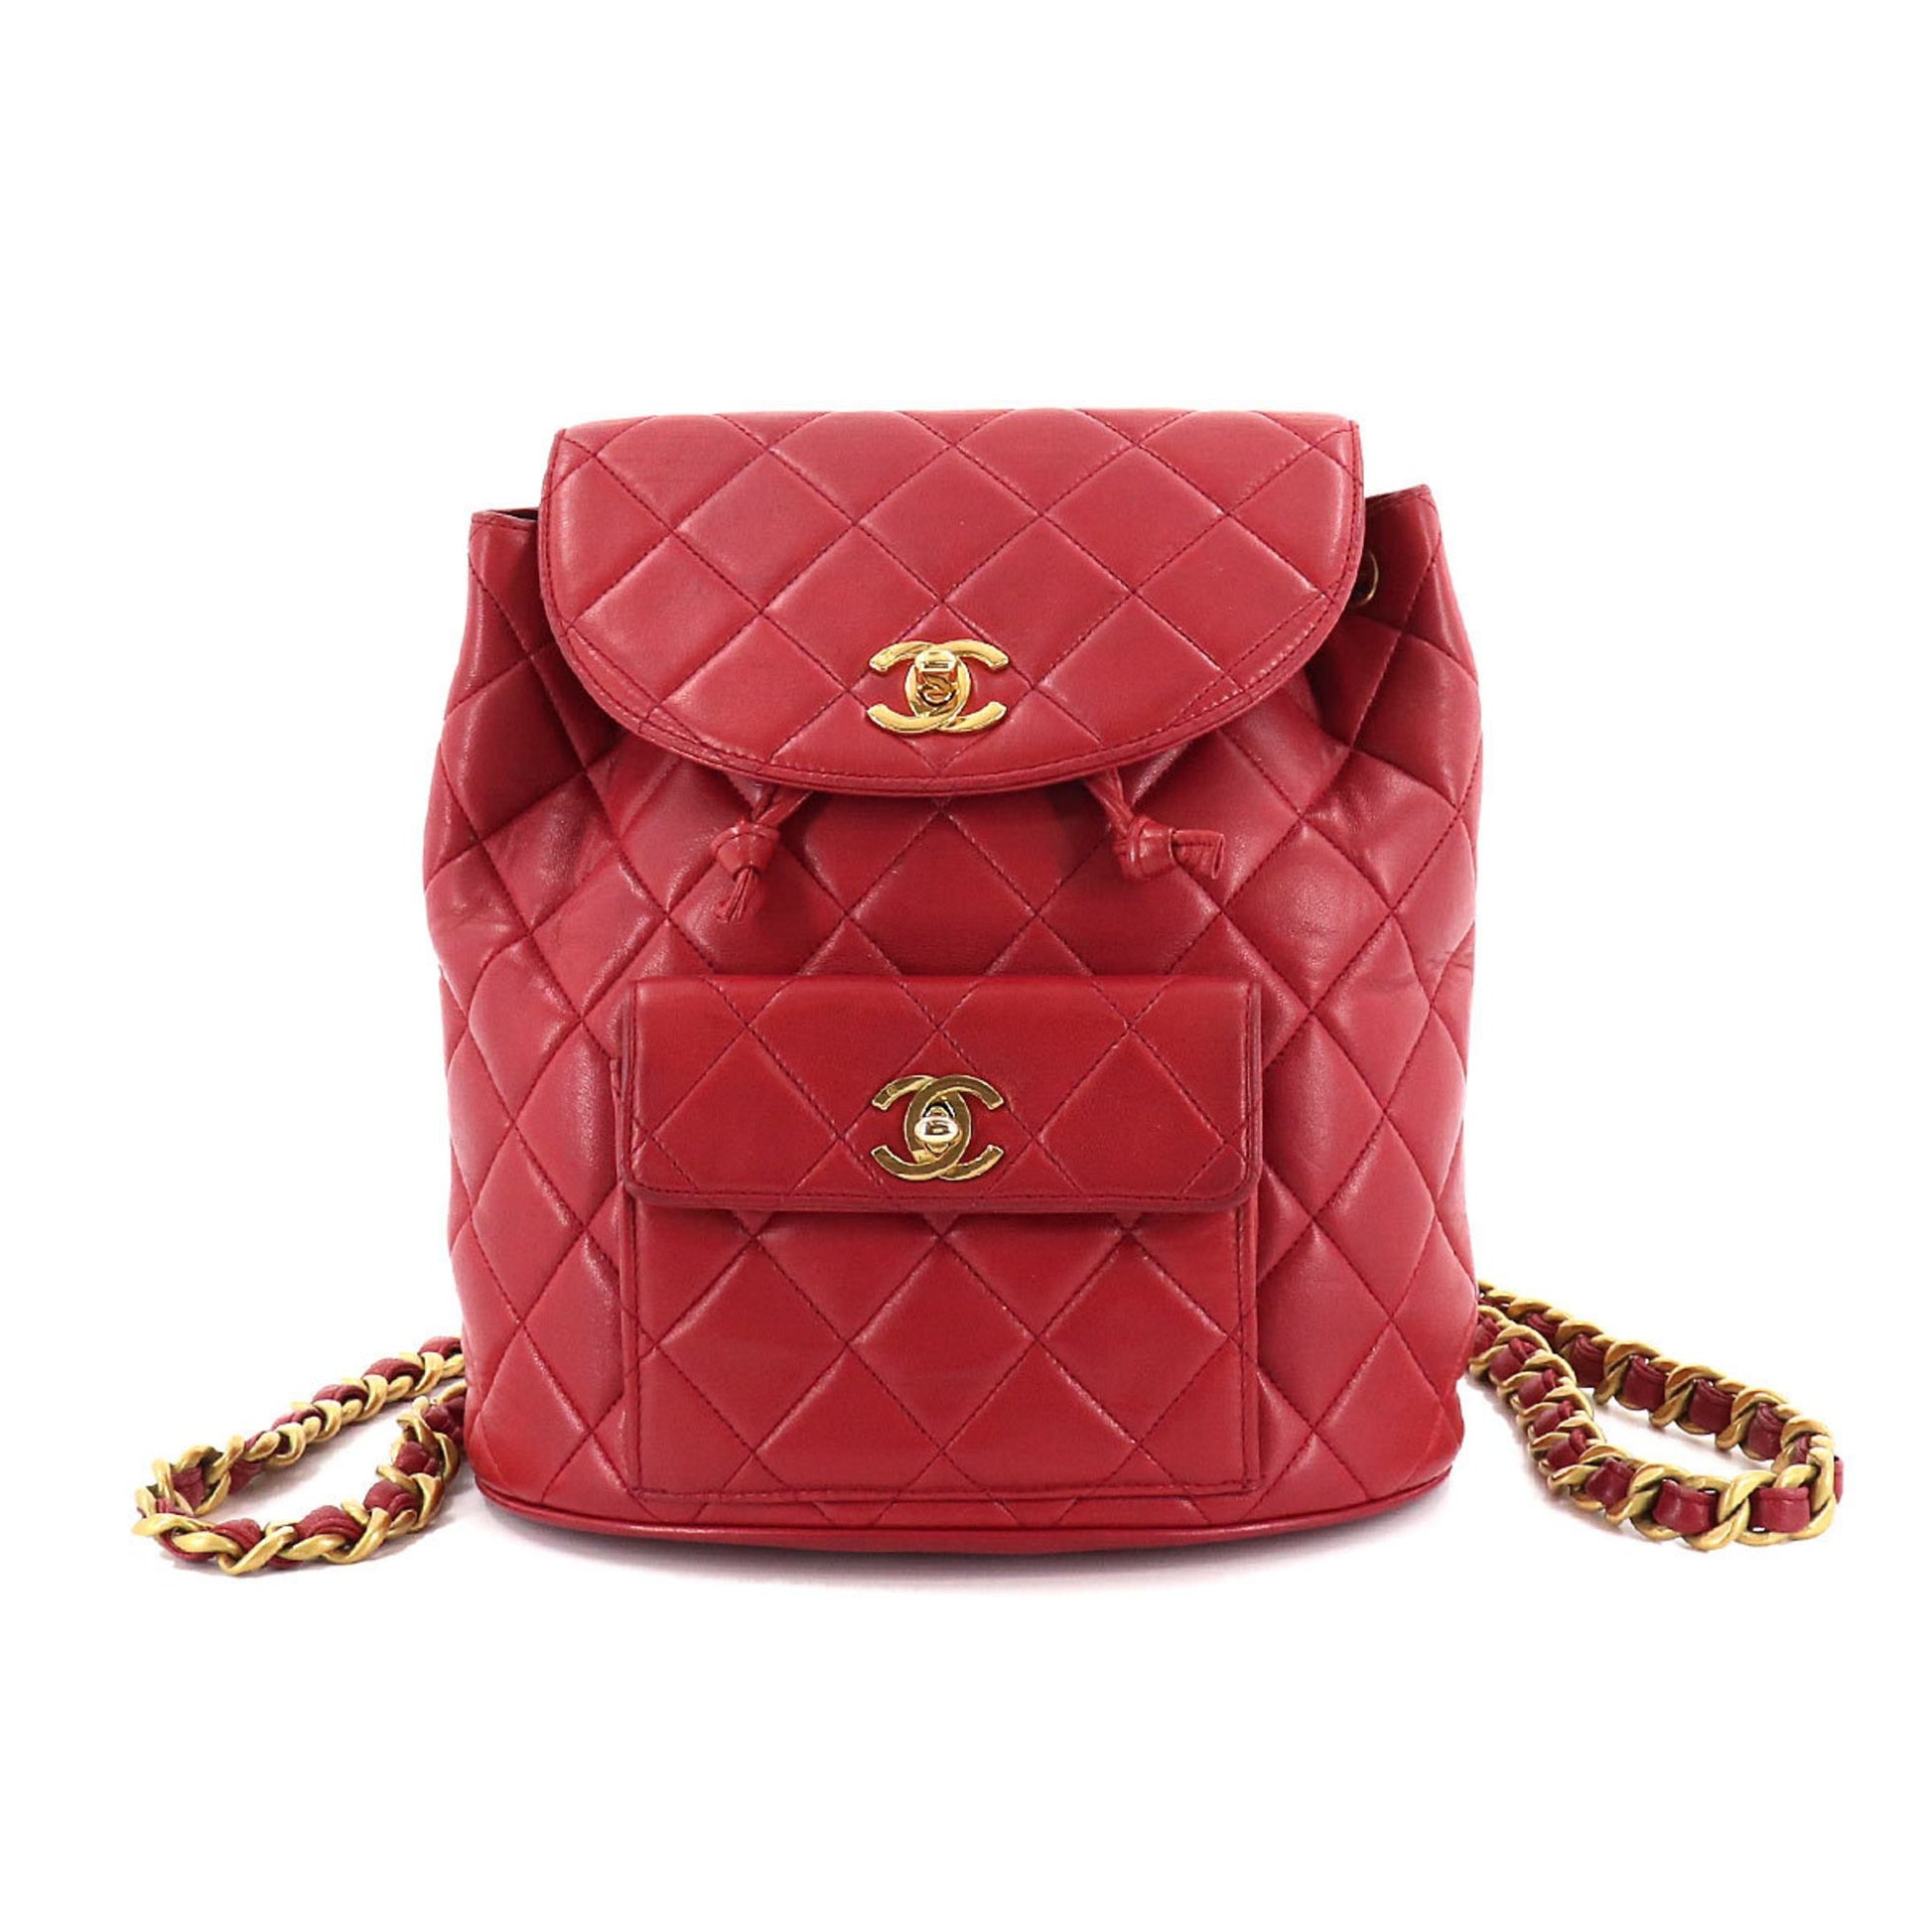 Chanel matelasse chain backpack rucksack leather red duma here mark Vi